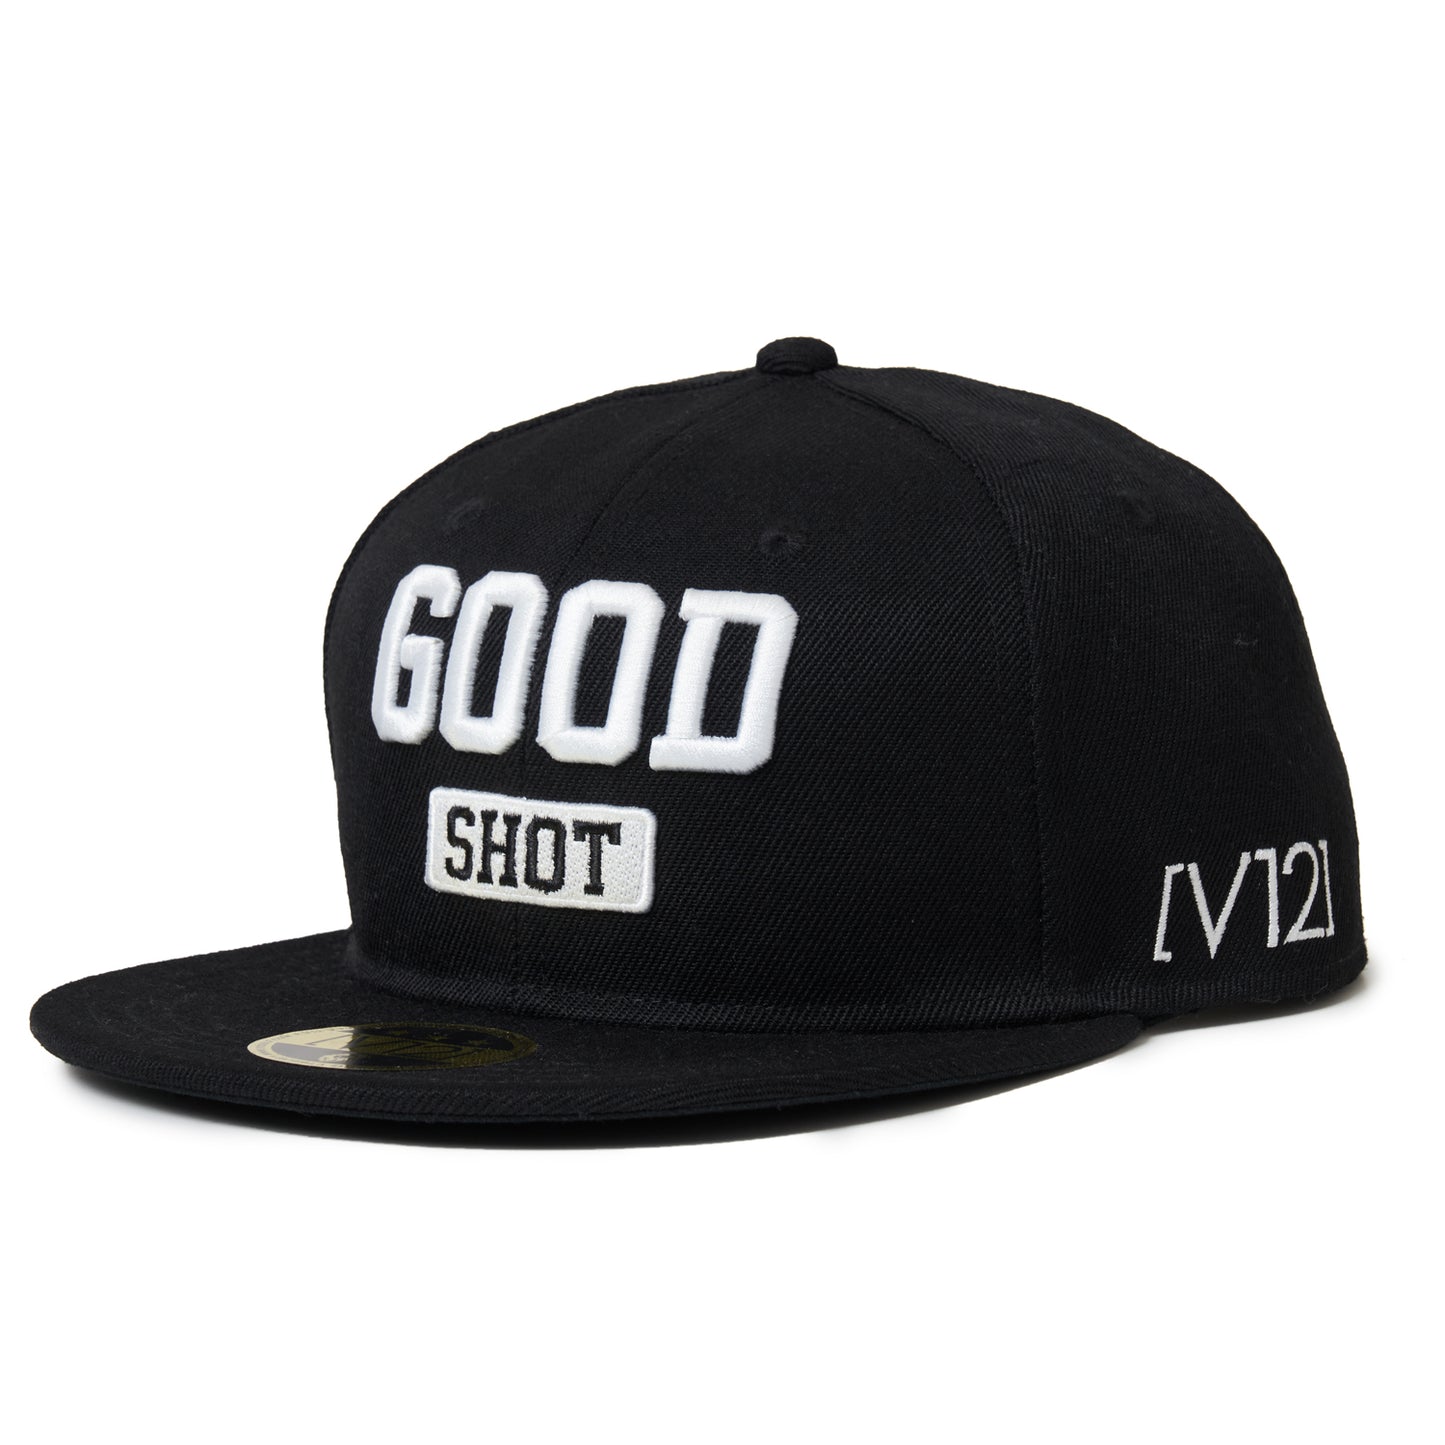 GOOD CAP